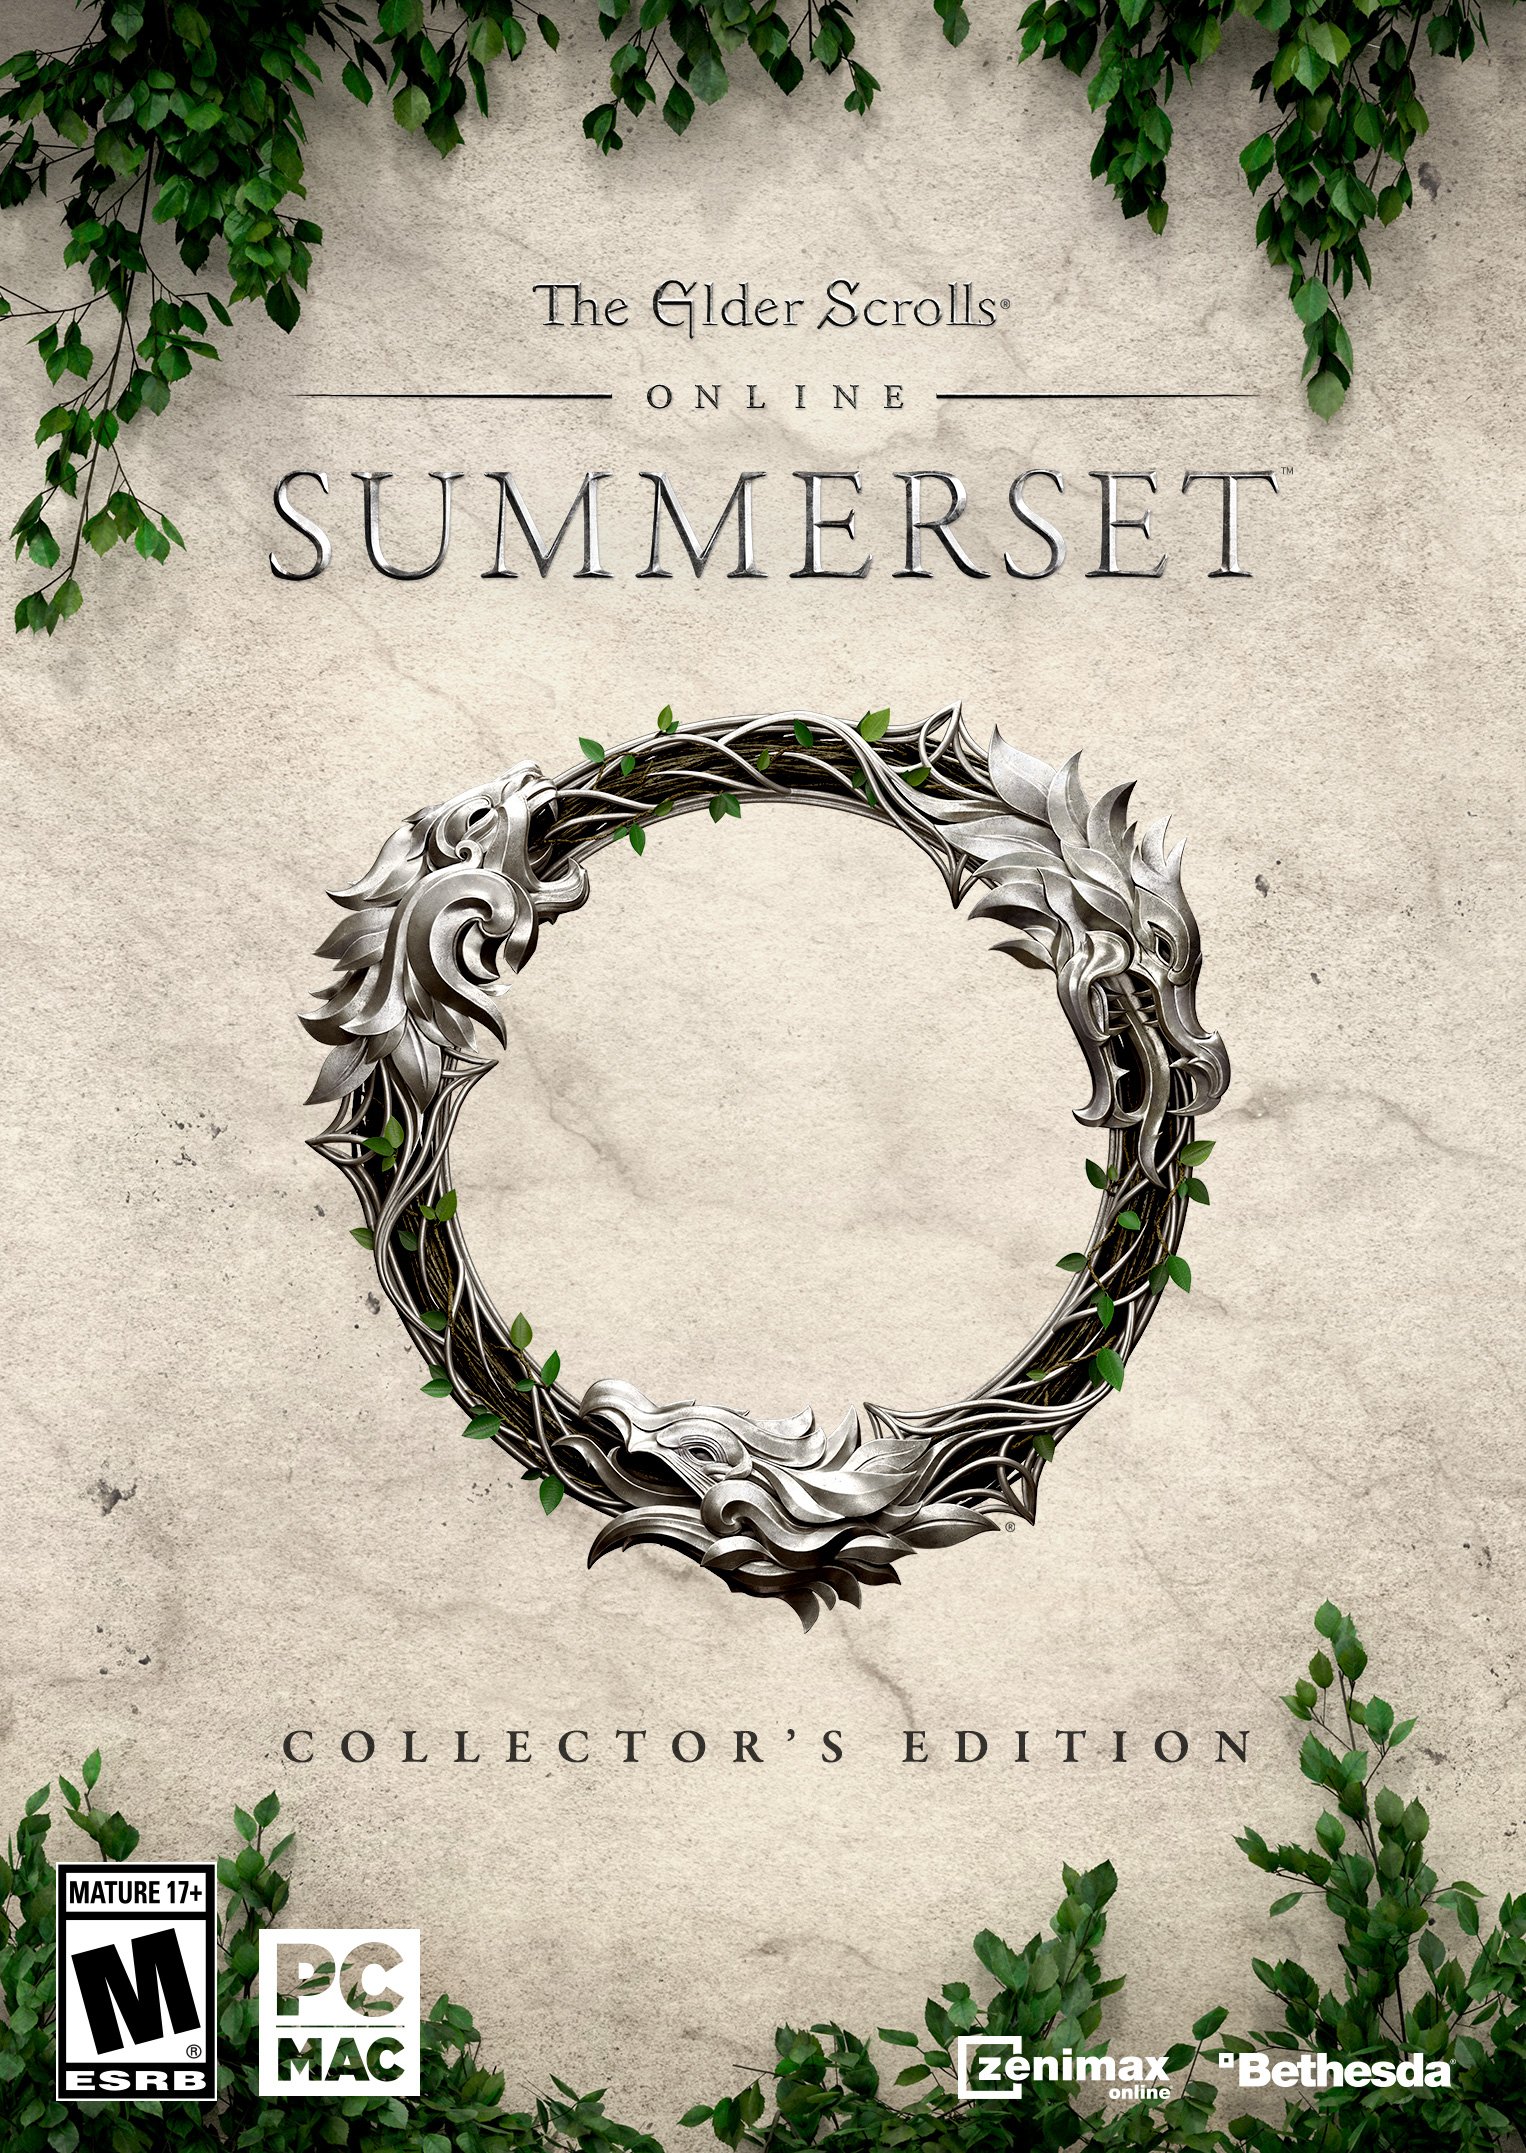 The Elder Scrolls Online: Summerset - PC Collector's Edition